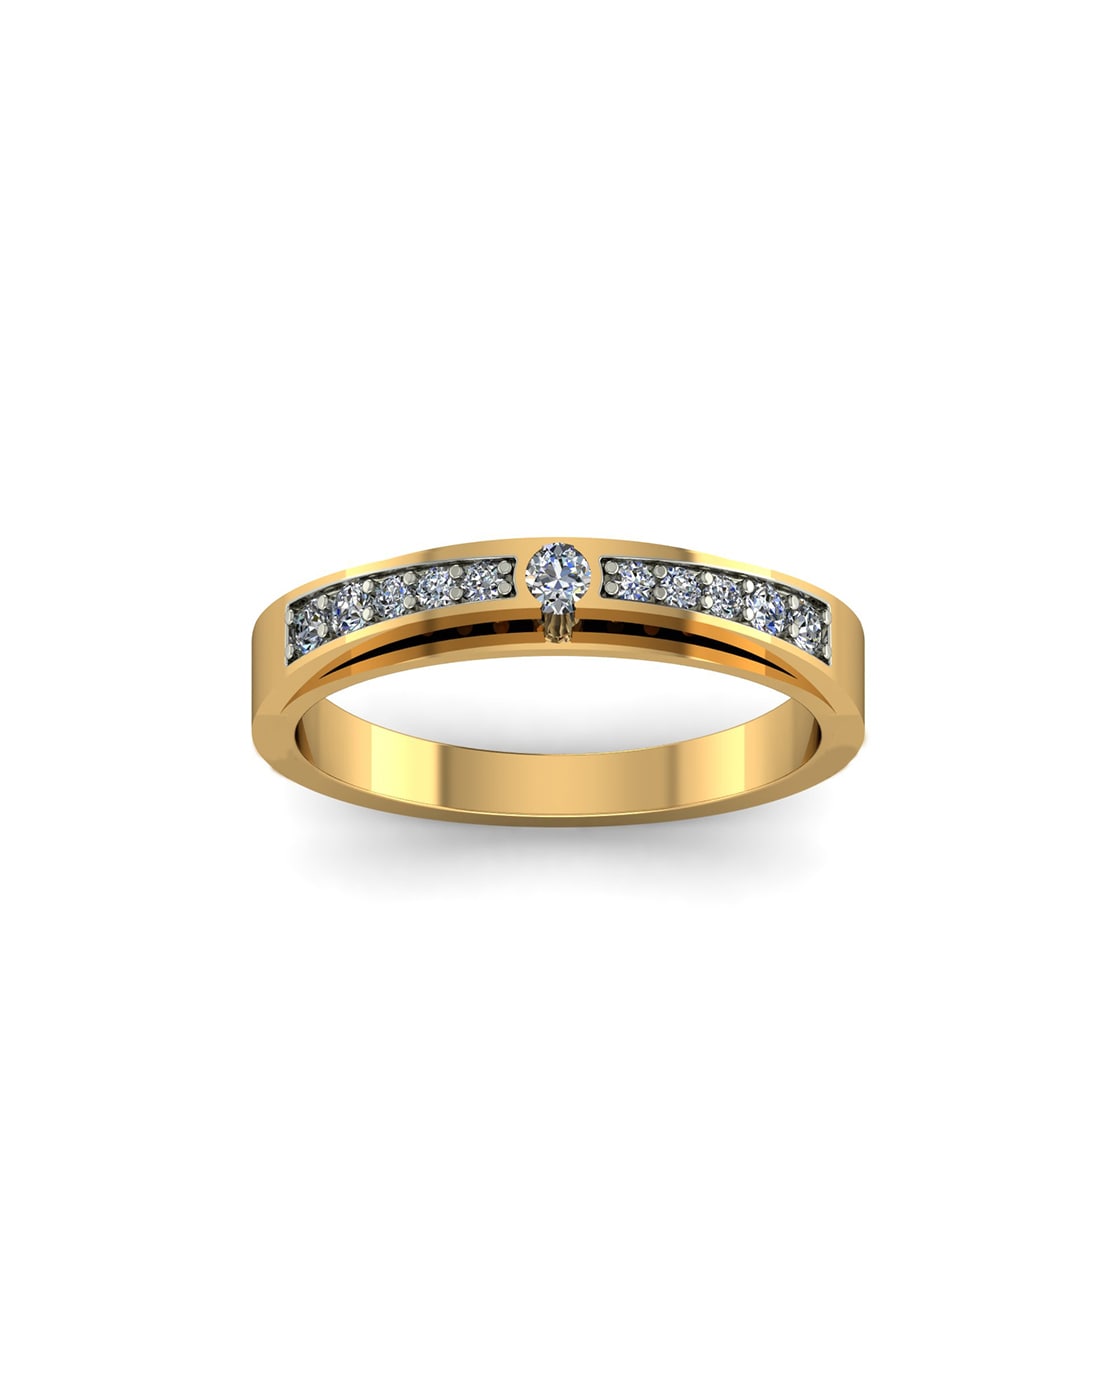 Channel Set Diamond Engagement Ring at Diamond and Gold Wa